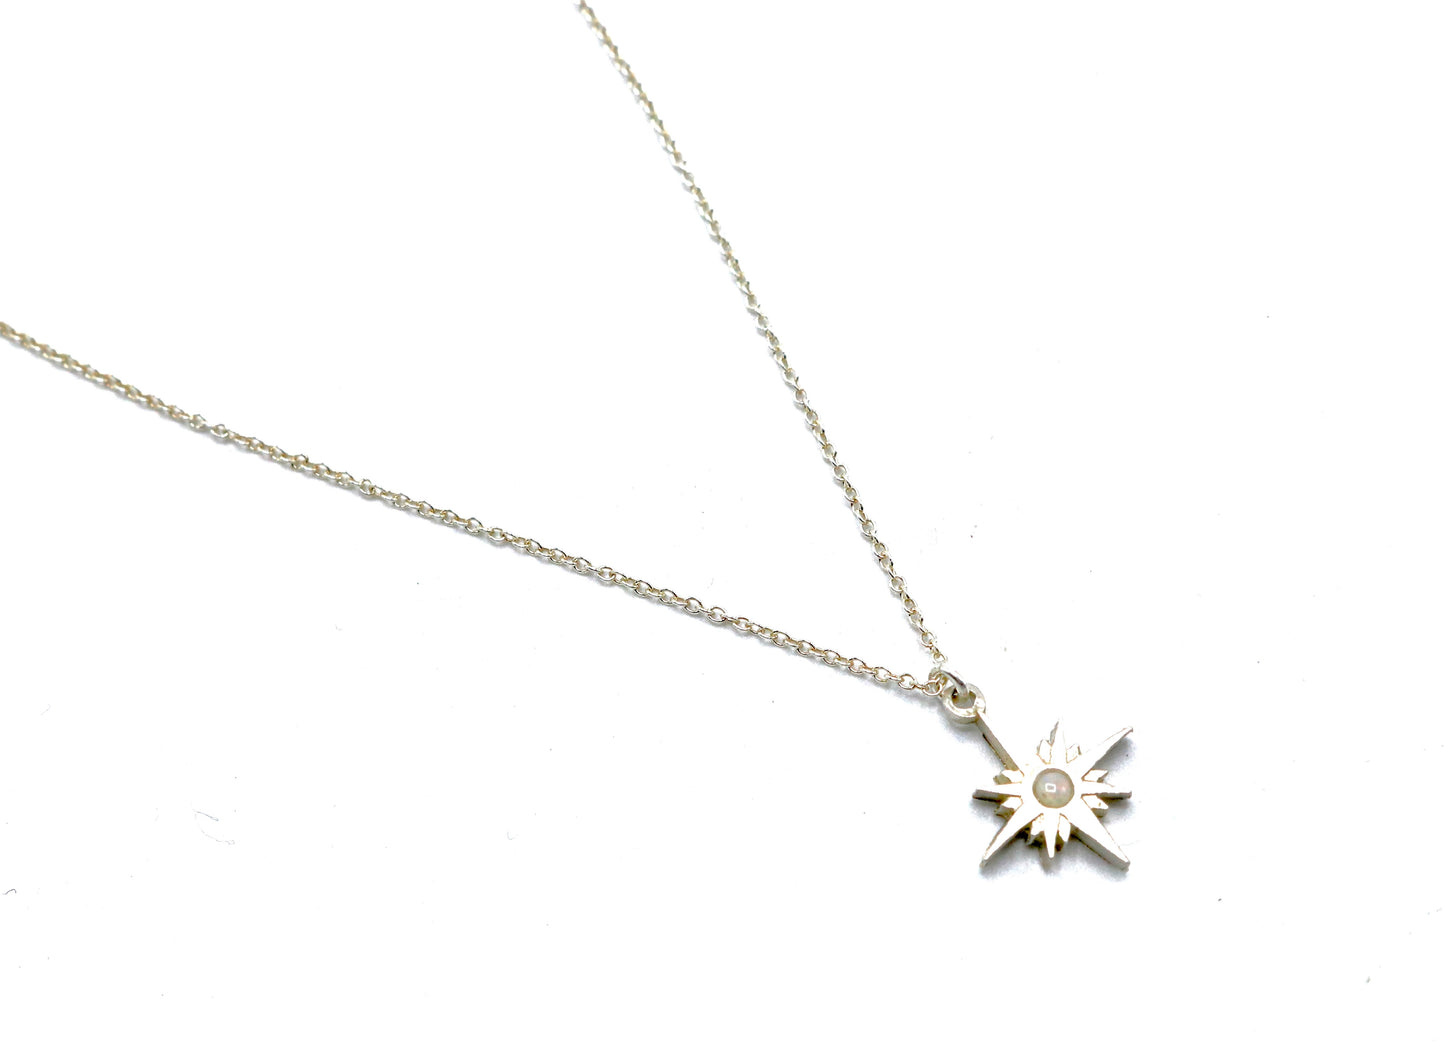 Starburst Necklace - Silver & Opal